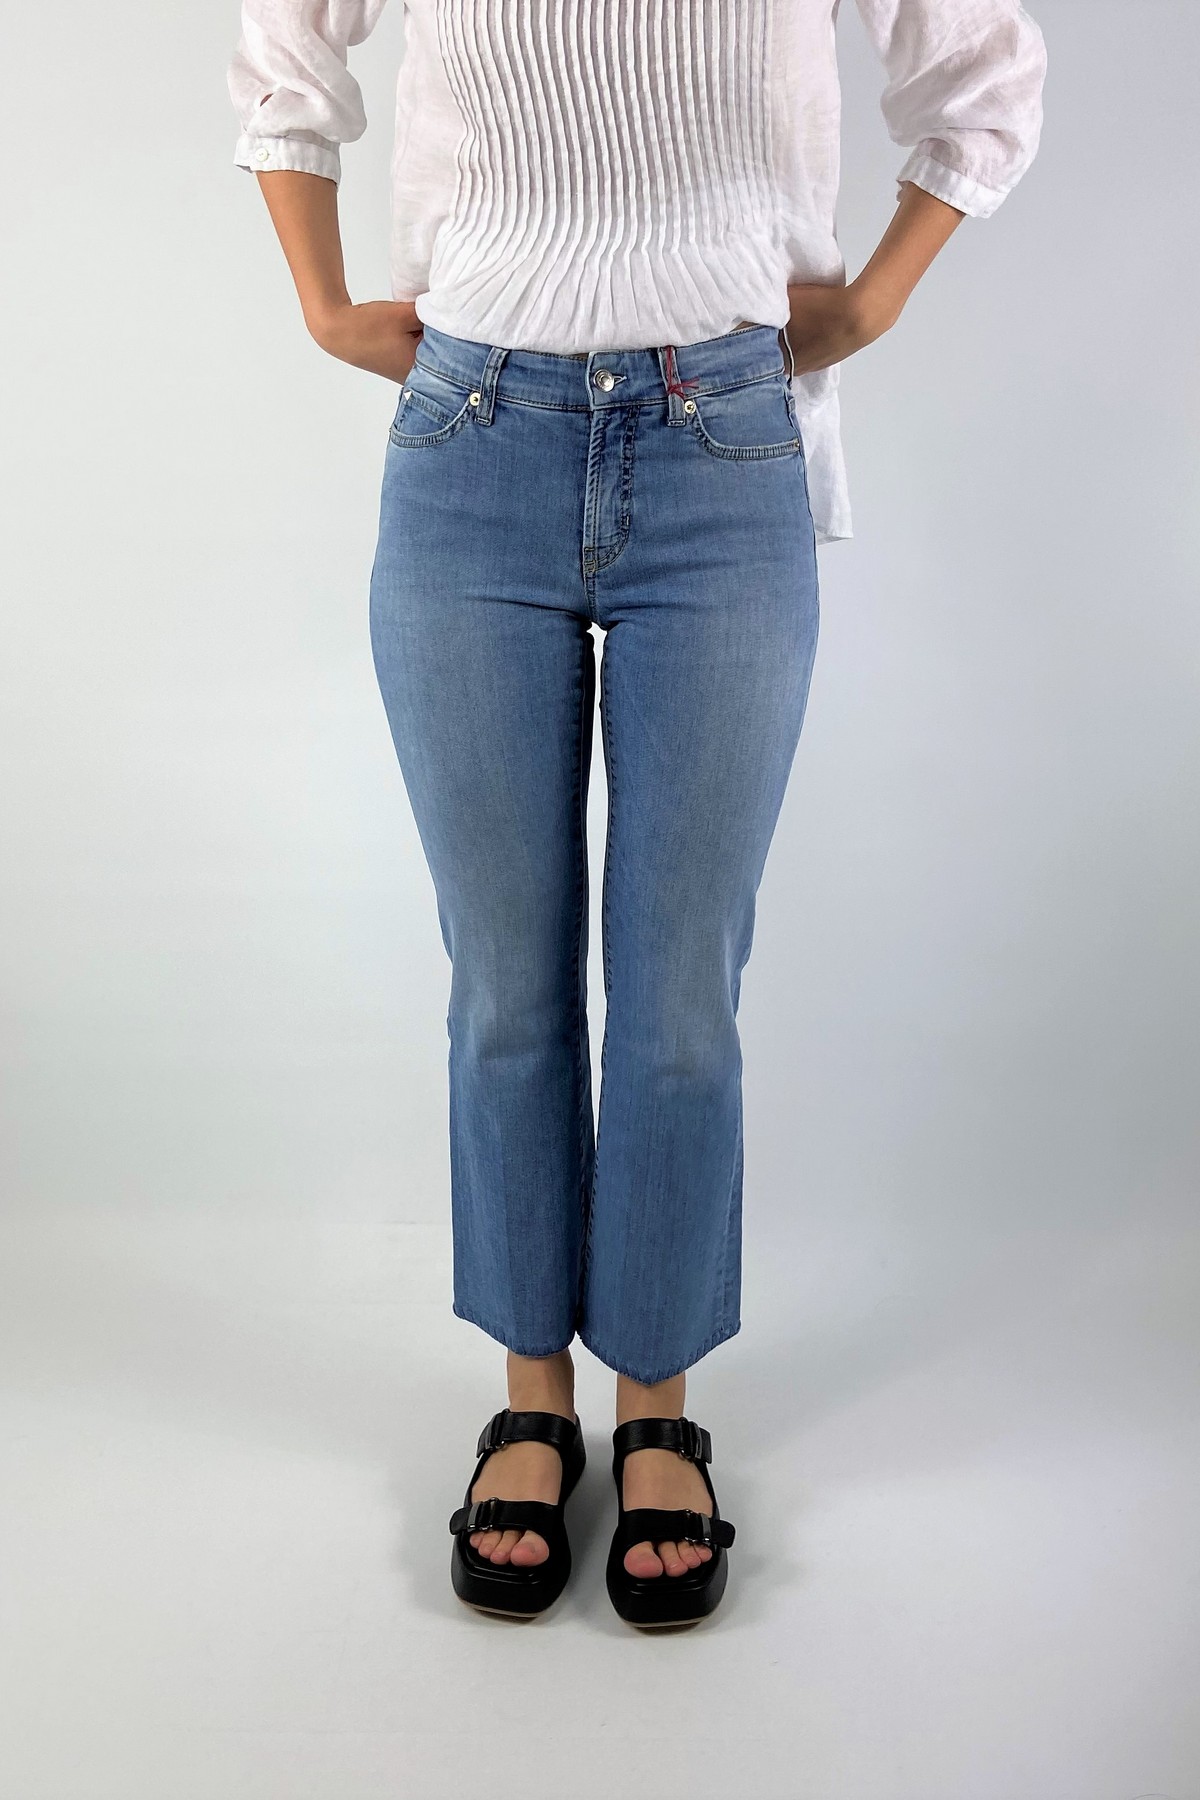 tentoonstelling Mart genie Webshop jeans | Nuance boutique Eeklo